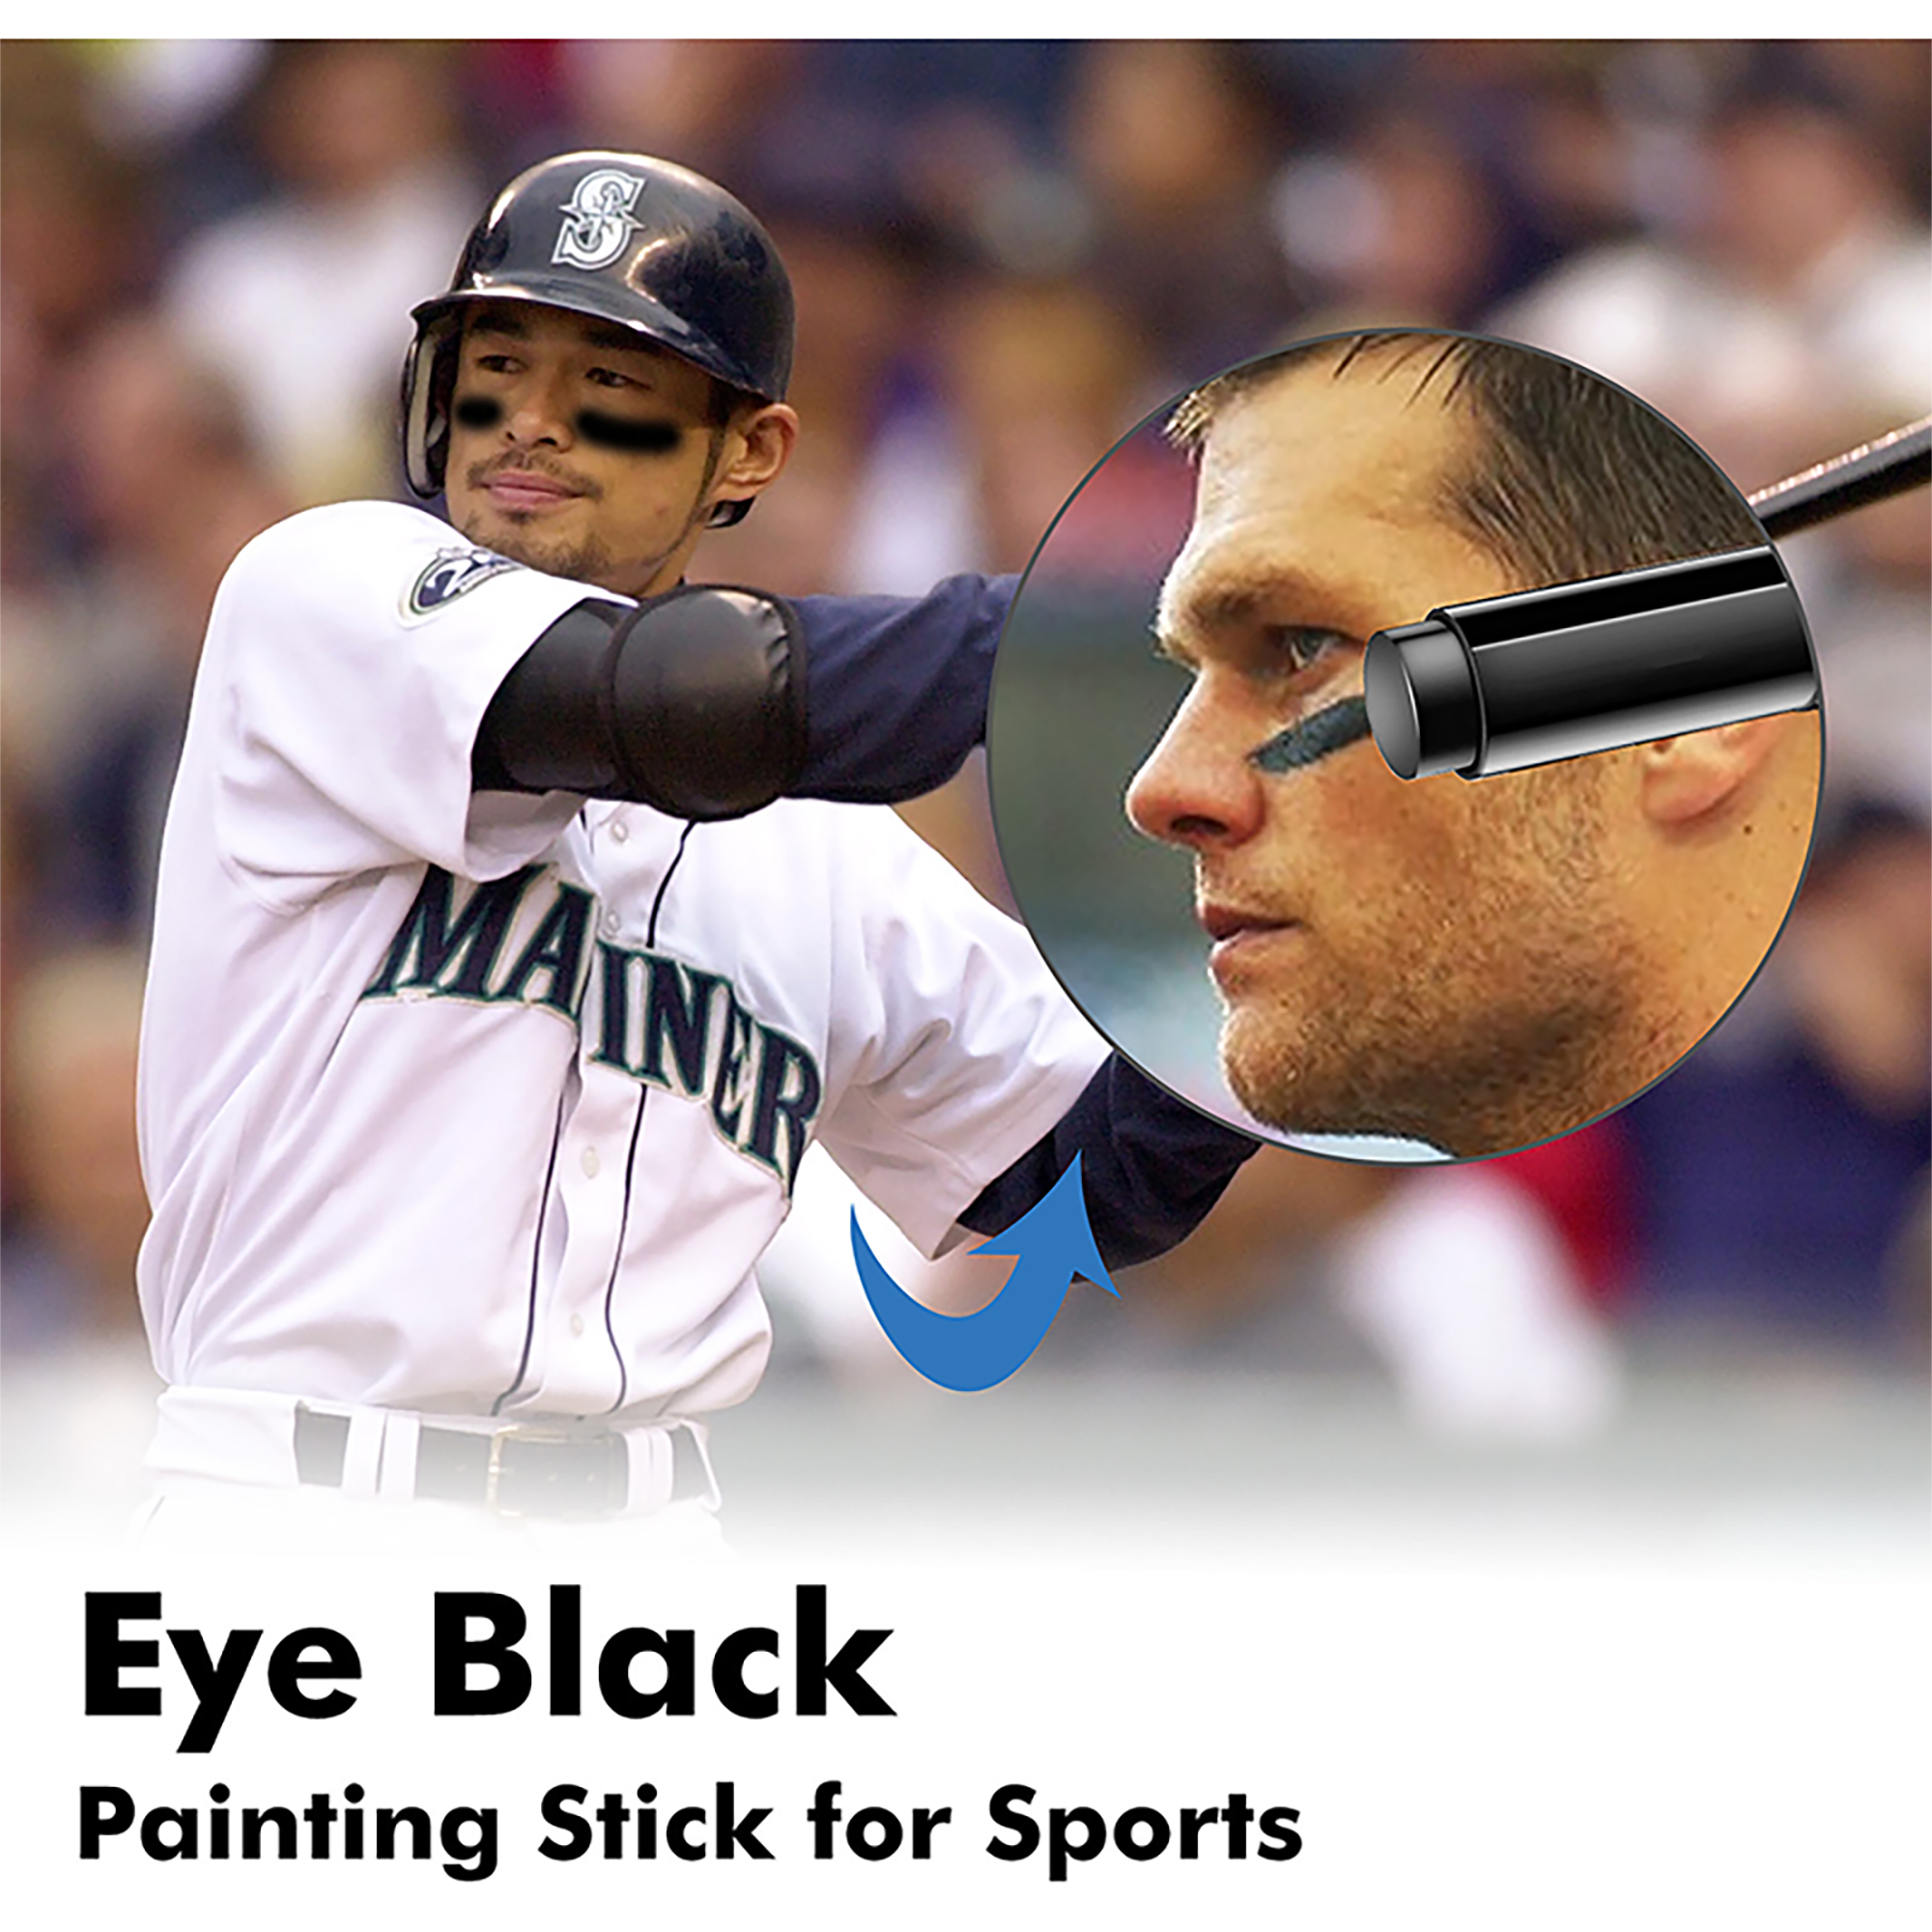 Thaisu Eye Black Stick for Sports, Men's Outdoor Baseball Highly Pigmented  Eyeblack Stick Black Face Paint Makeup